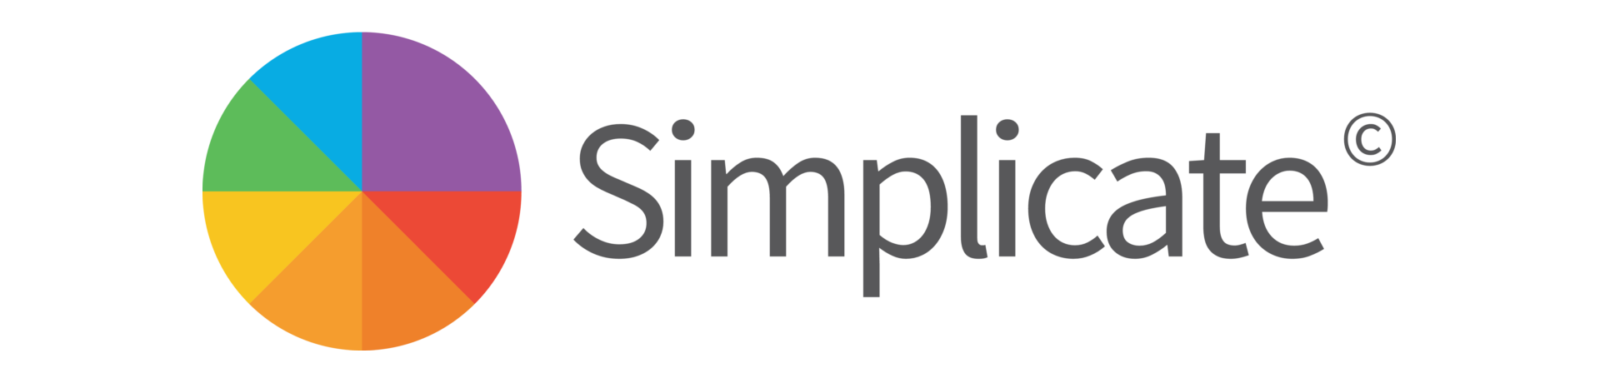 simplicate logo